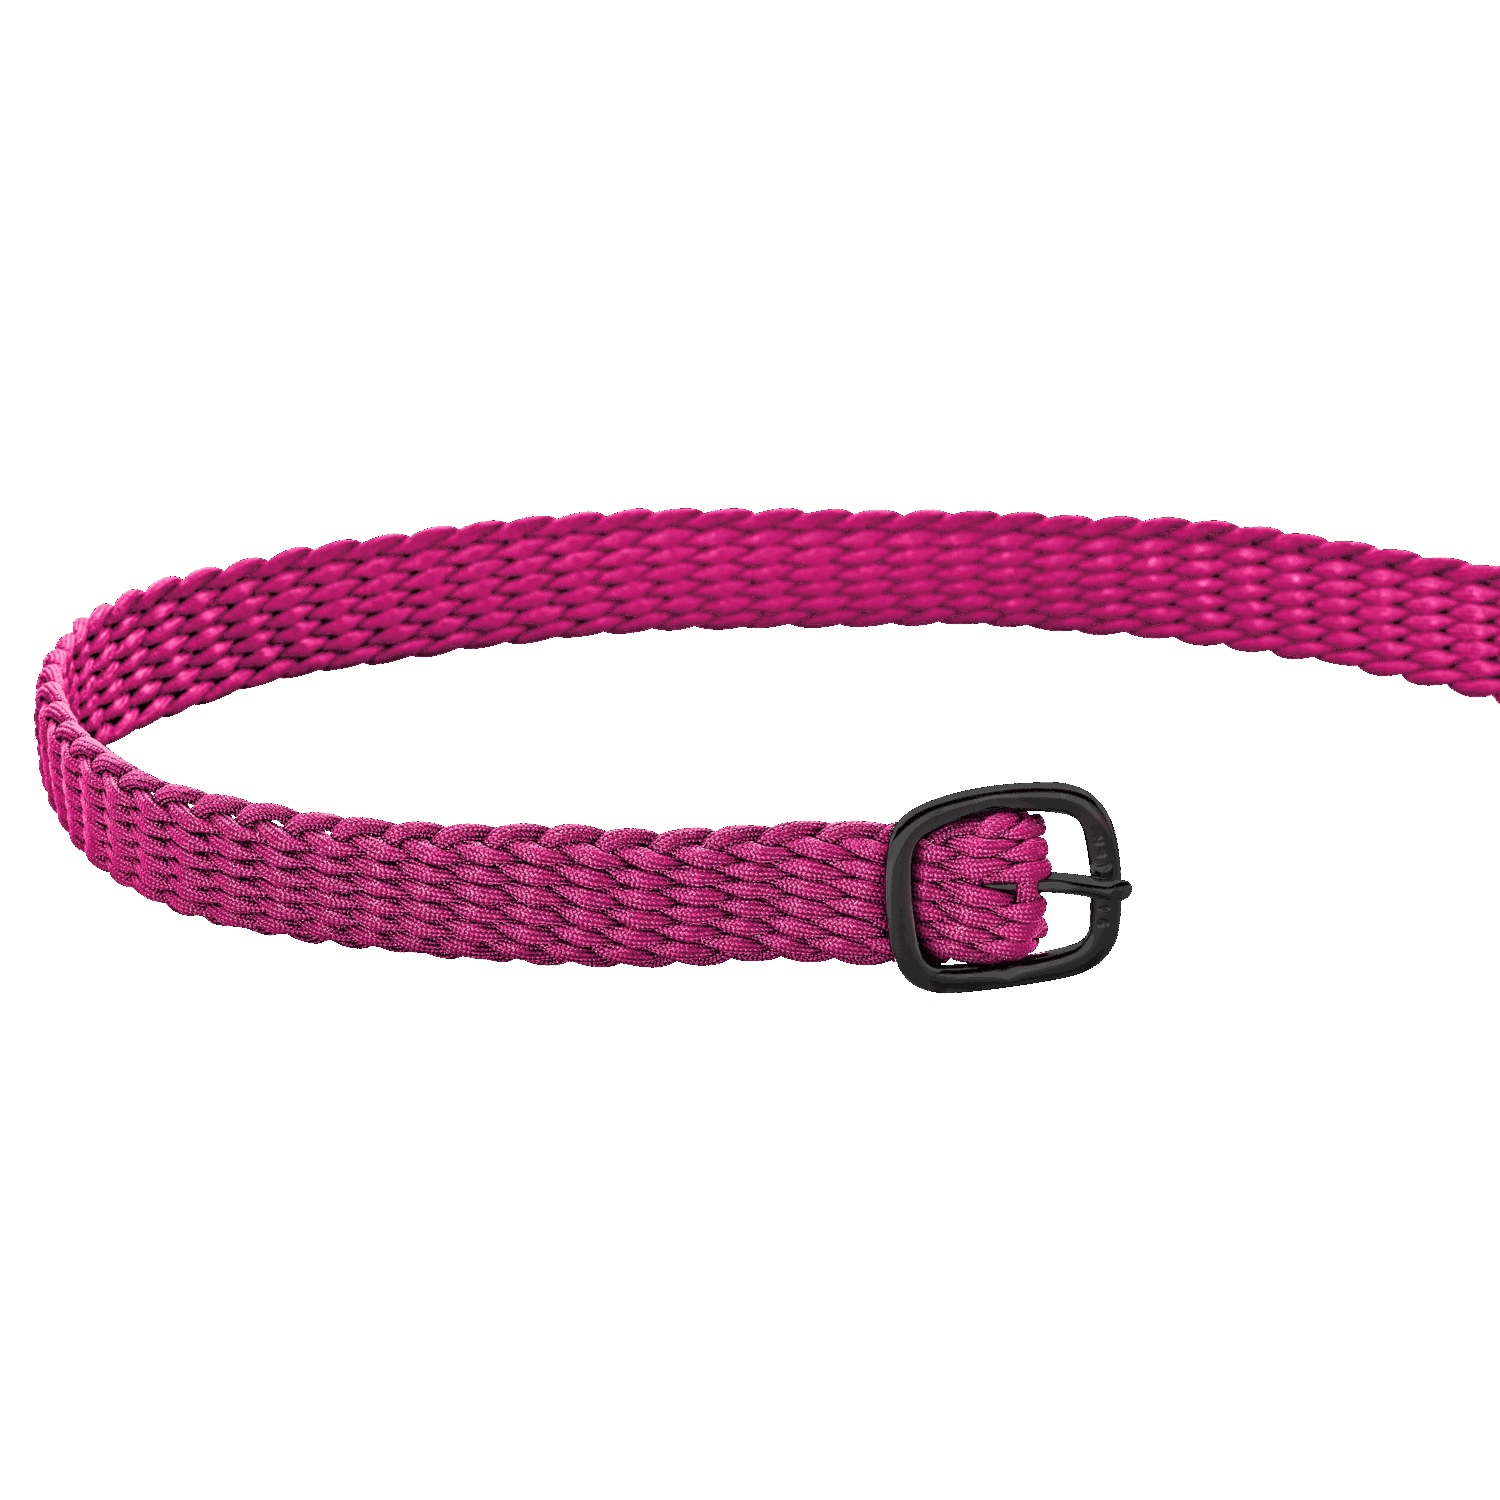 Sporenriemen - 45 cm, Perlon pink, Schnalle anthrazit | 49189_B1.png | 1700897313